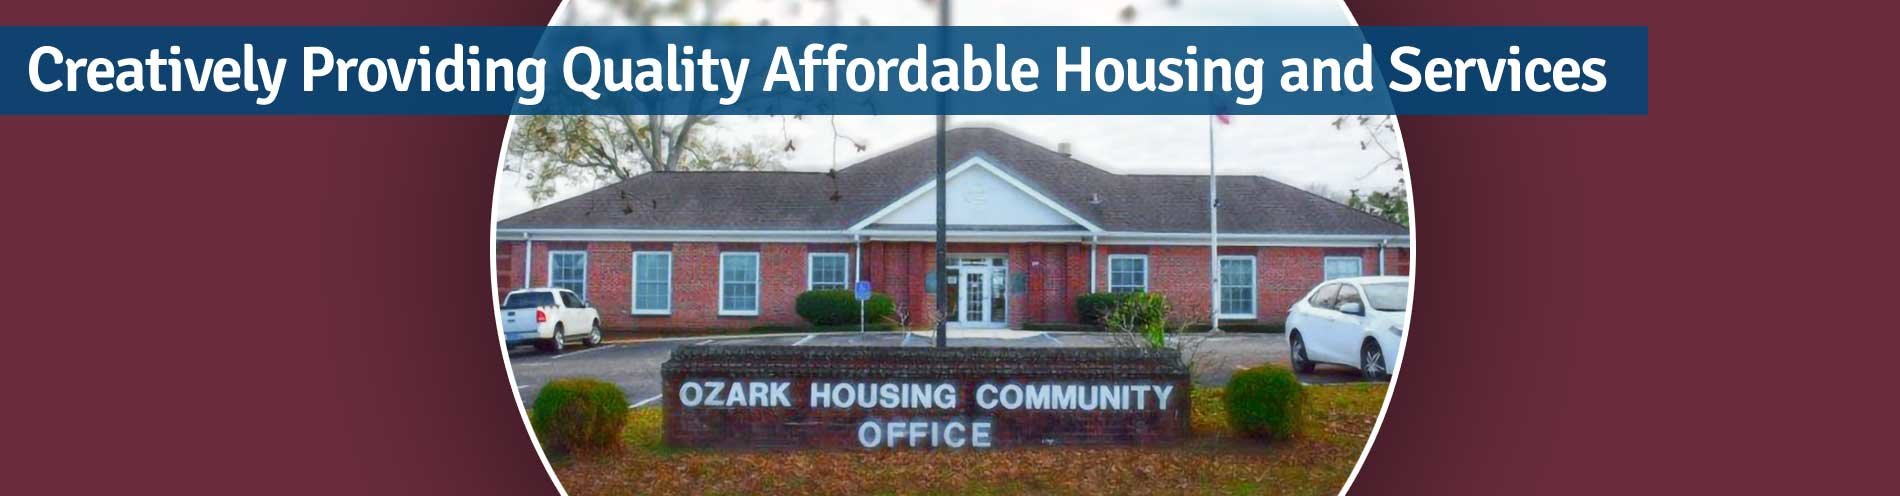 Ozark Housing Communities Office Exterior